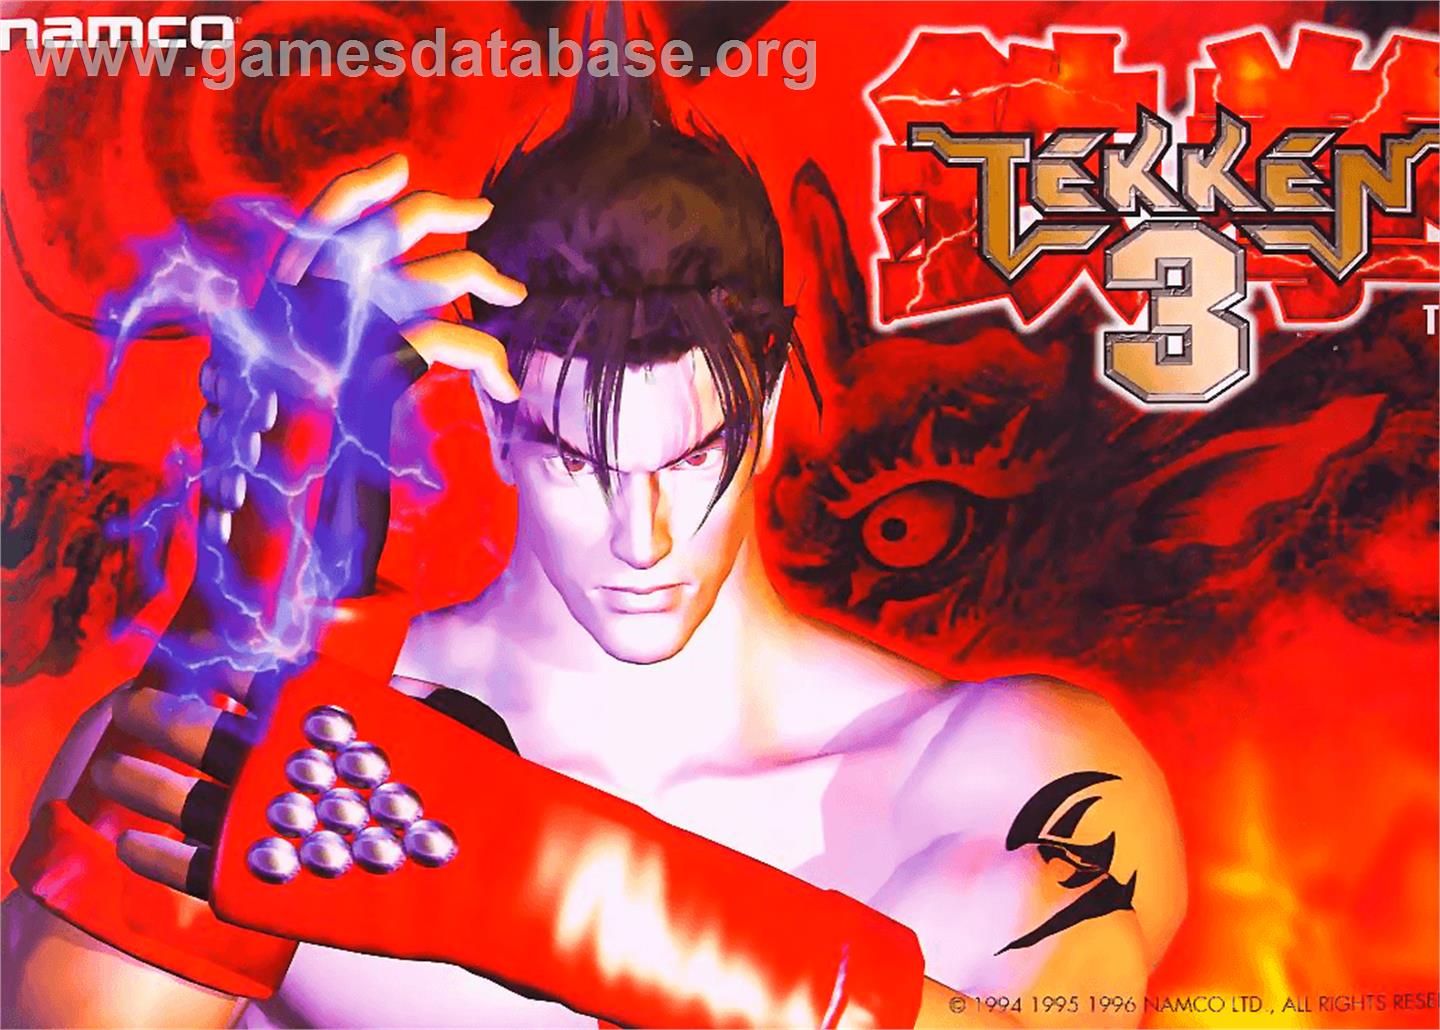 Tekken 3 - Sony Playstation - Artwork - Advert